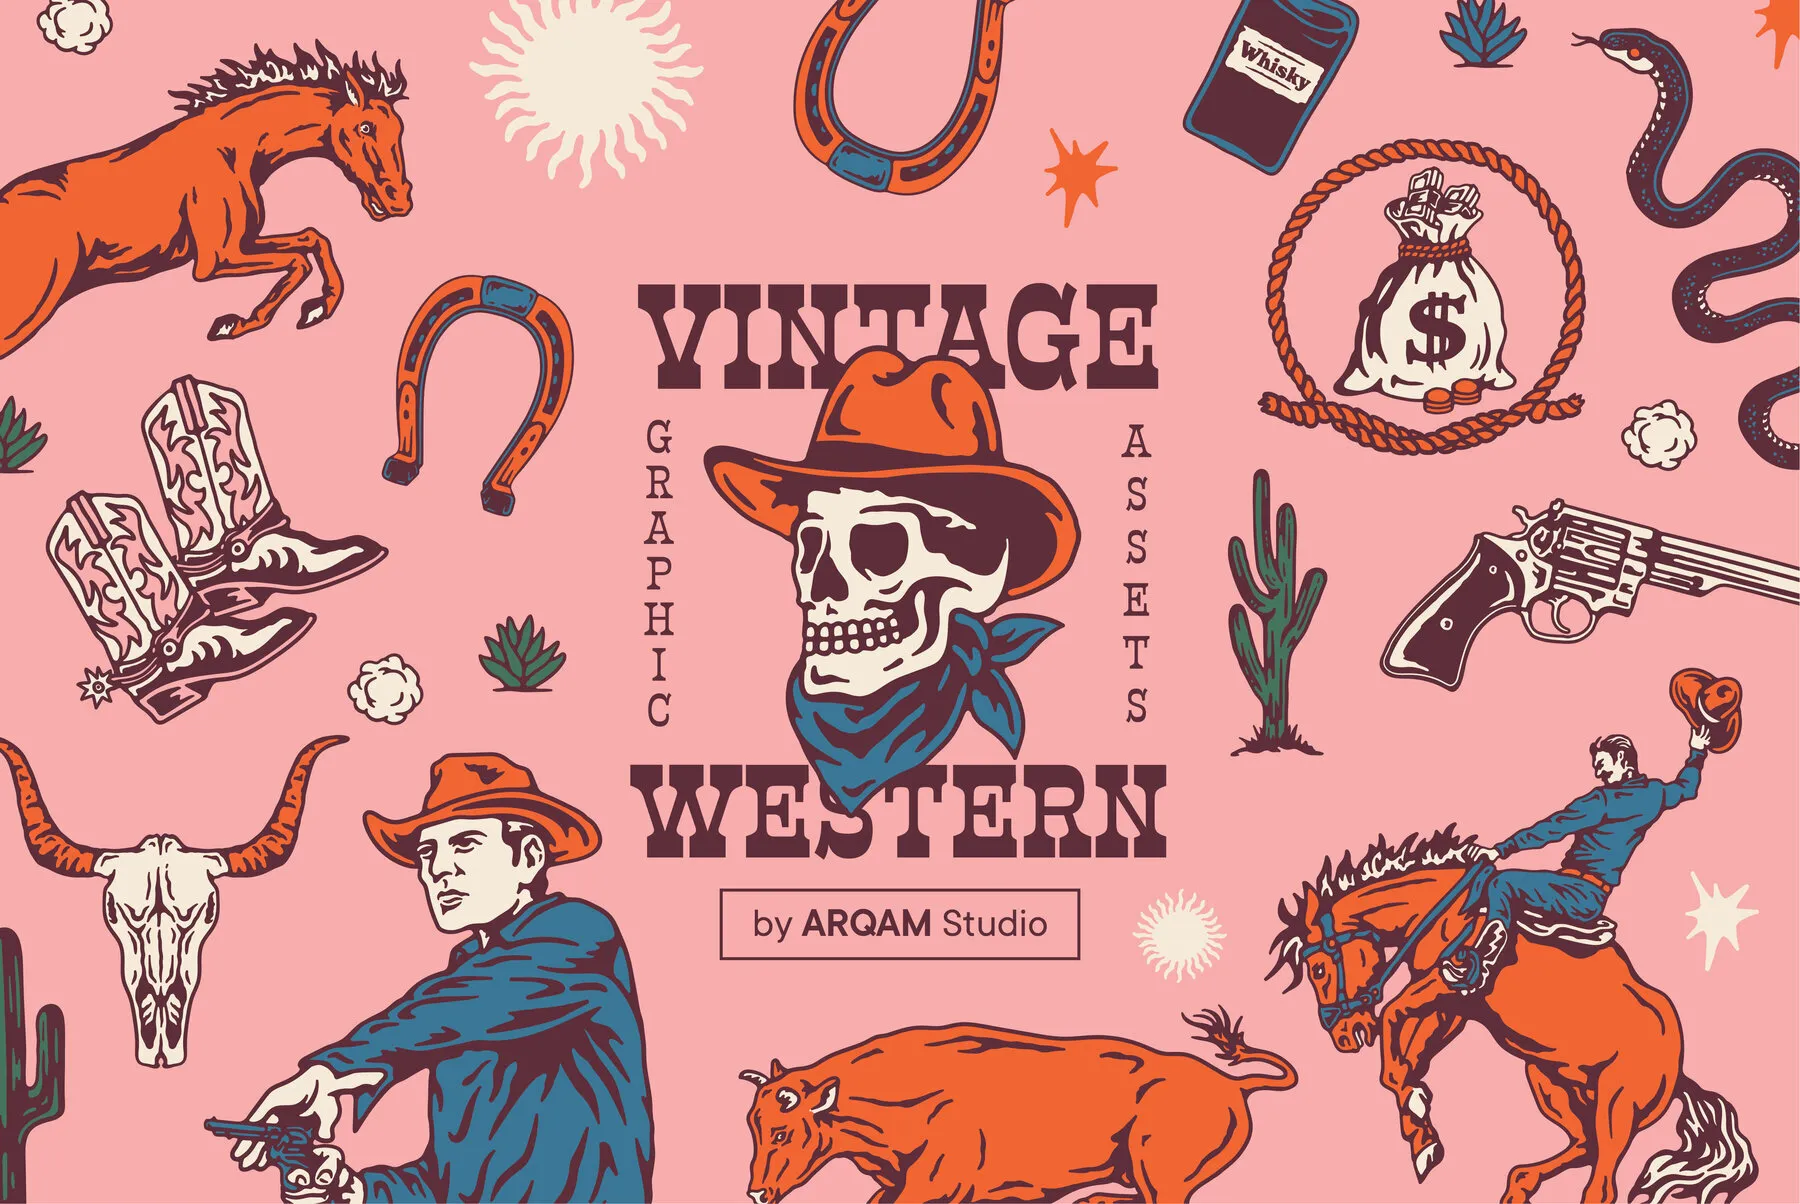 Vintage Western Graphic Assets